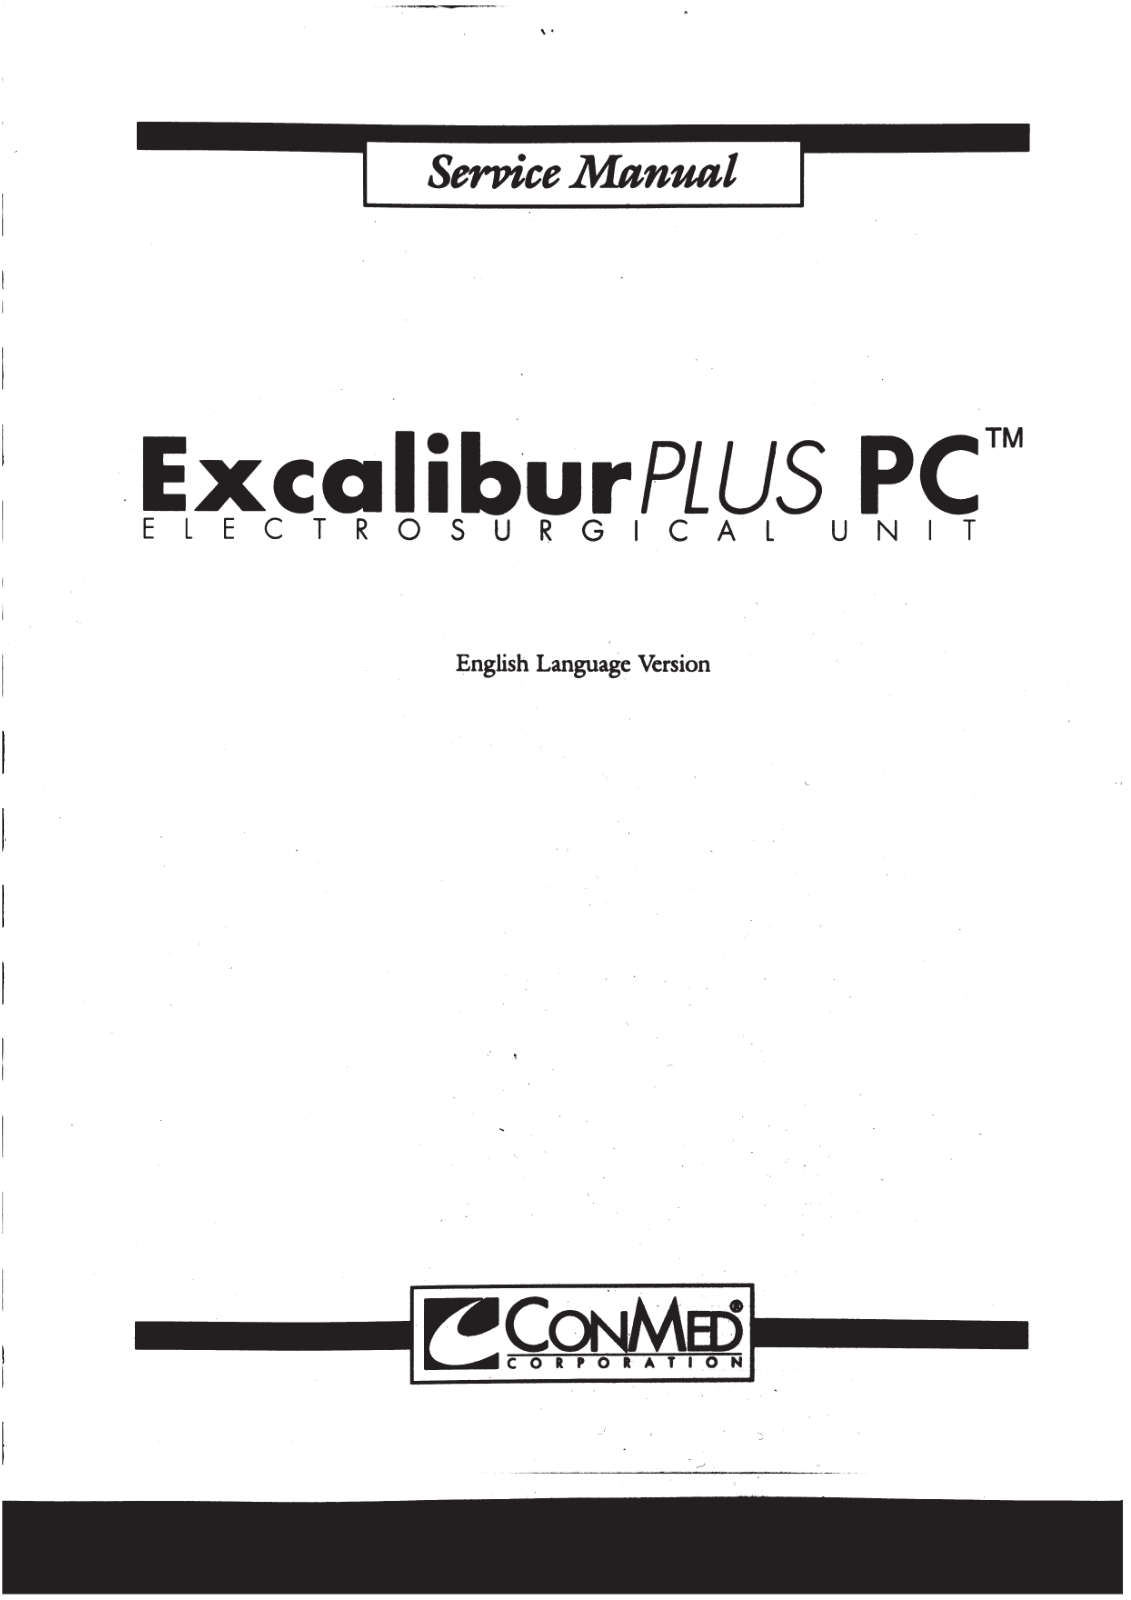 Conmed Excalibur Plus PC Service Manual